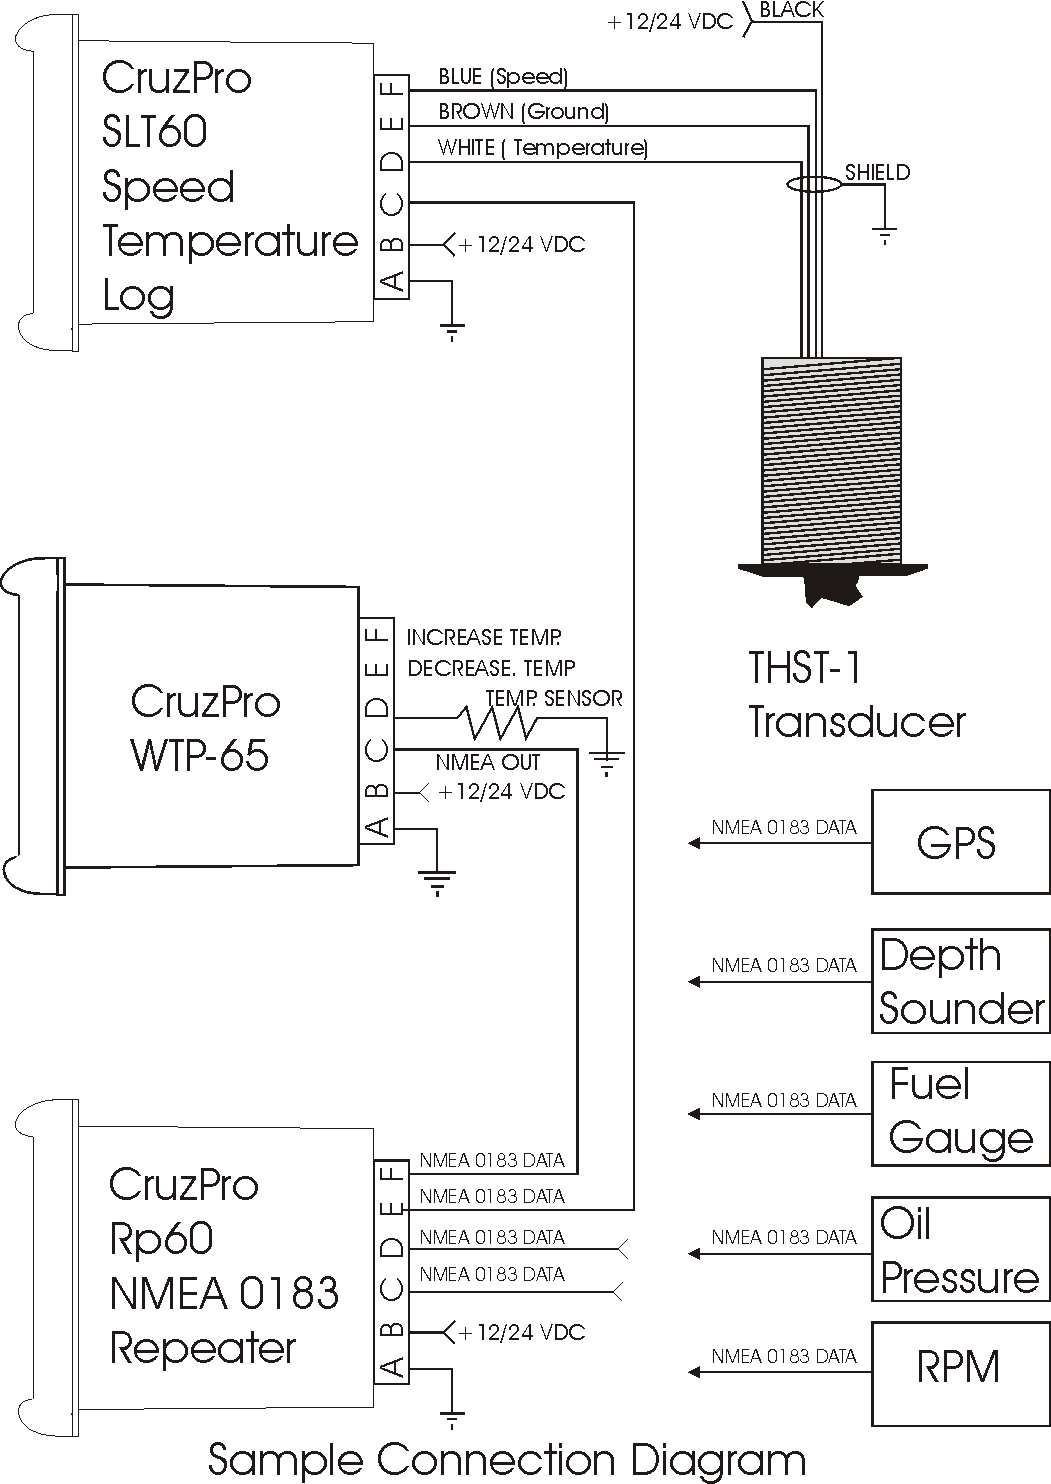 Sample RP60 Connection Diagram